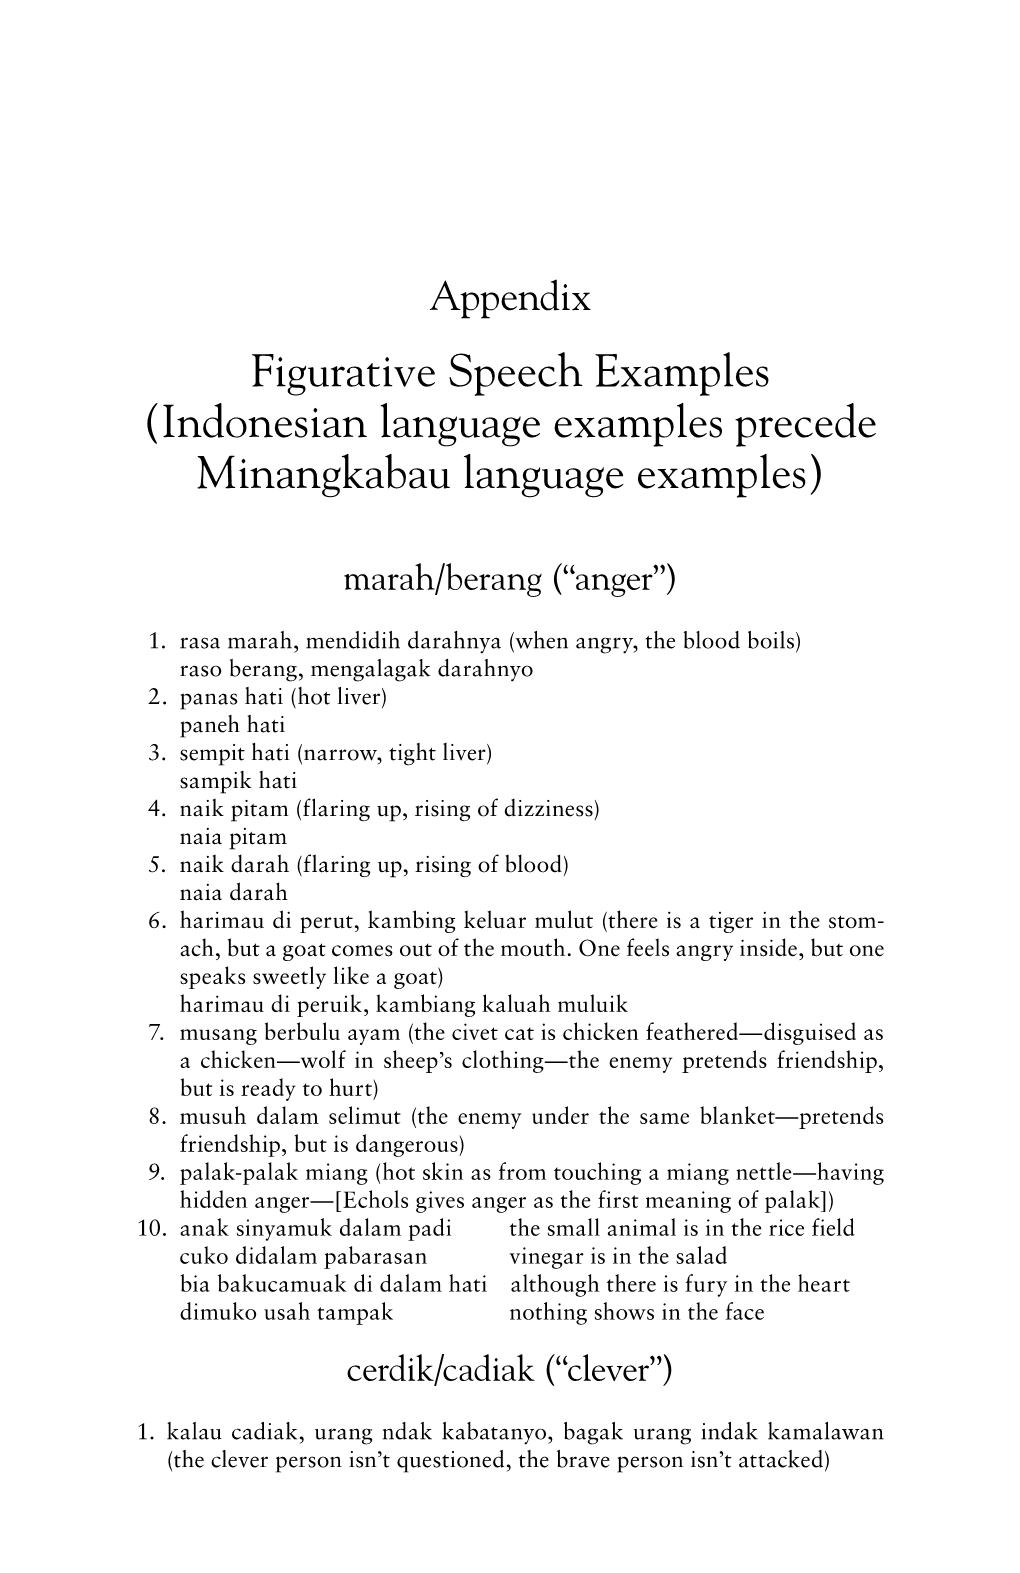 Figurative Speech Examples (Indonesian Language Examples Precede Minangkabau Language Examples)